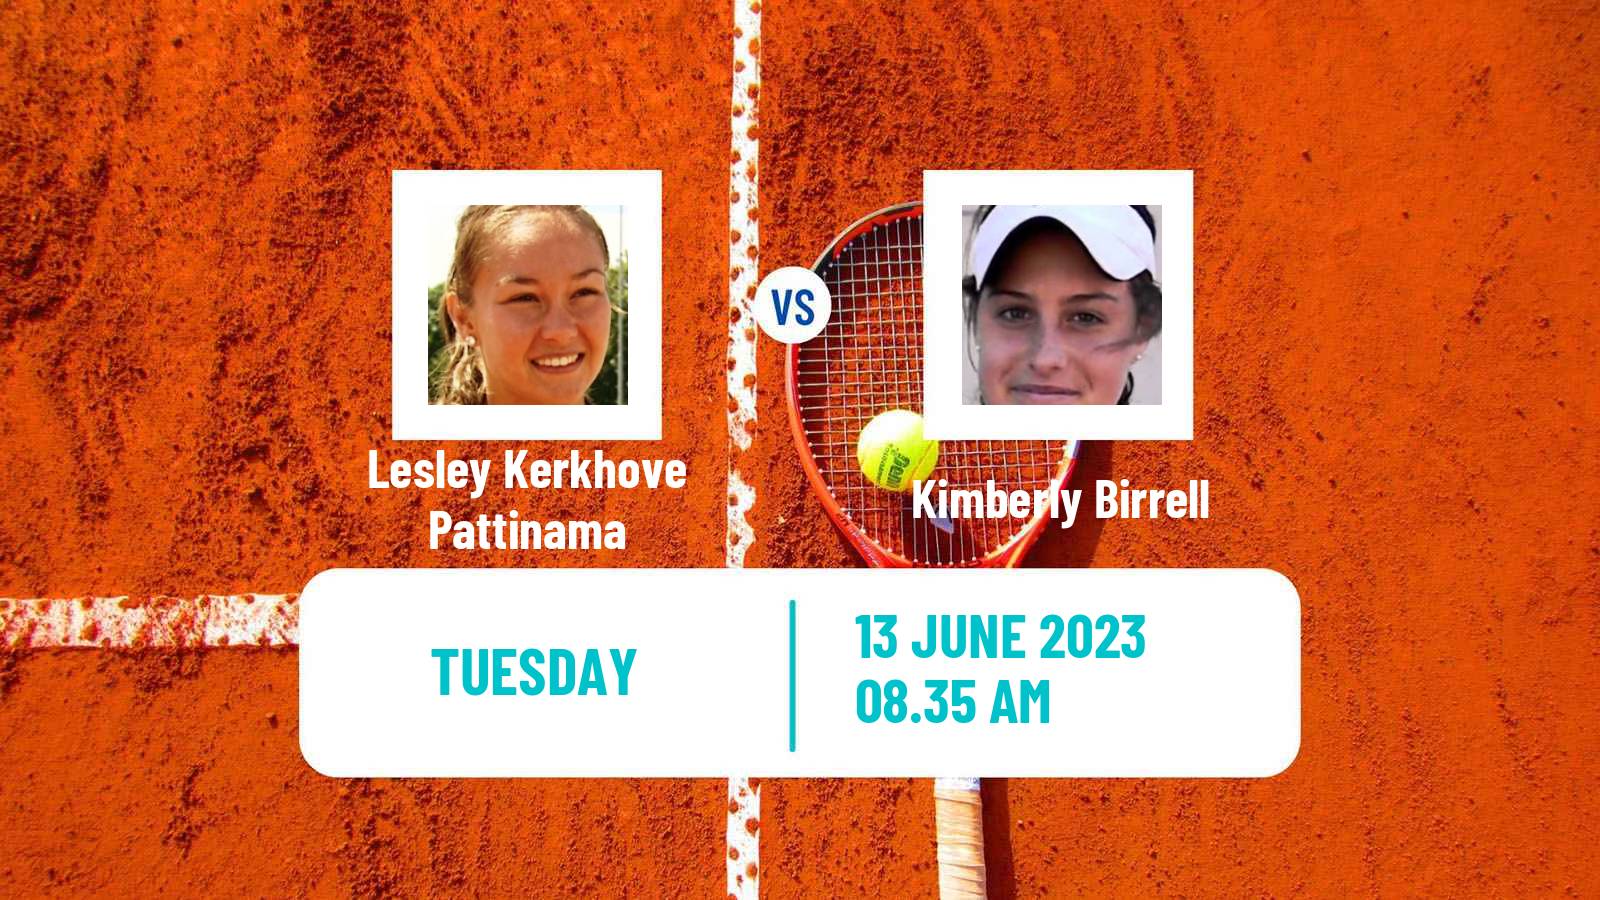 Tennis WTA Hertogenbosch Lesley Kerkhove Pattinama - Kimberly Birrell